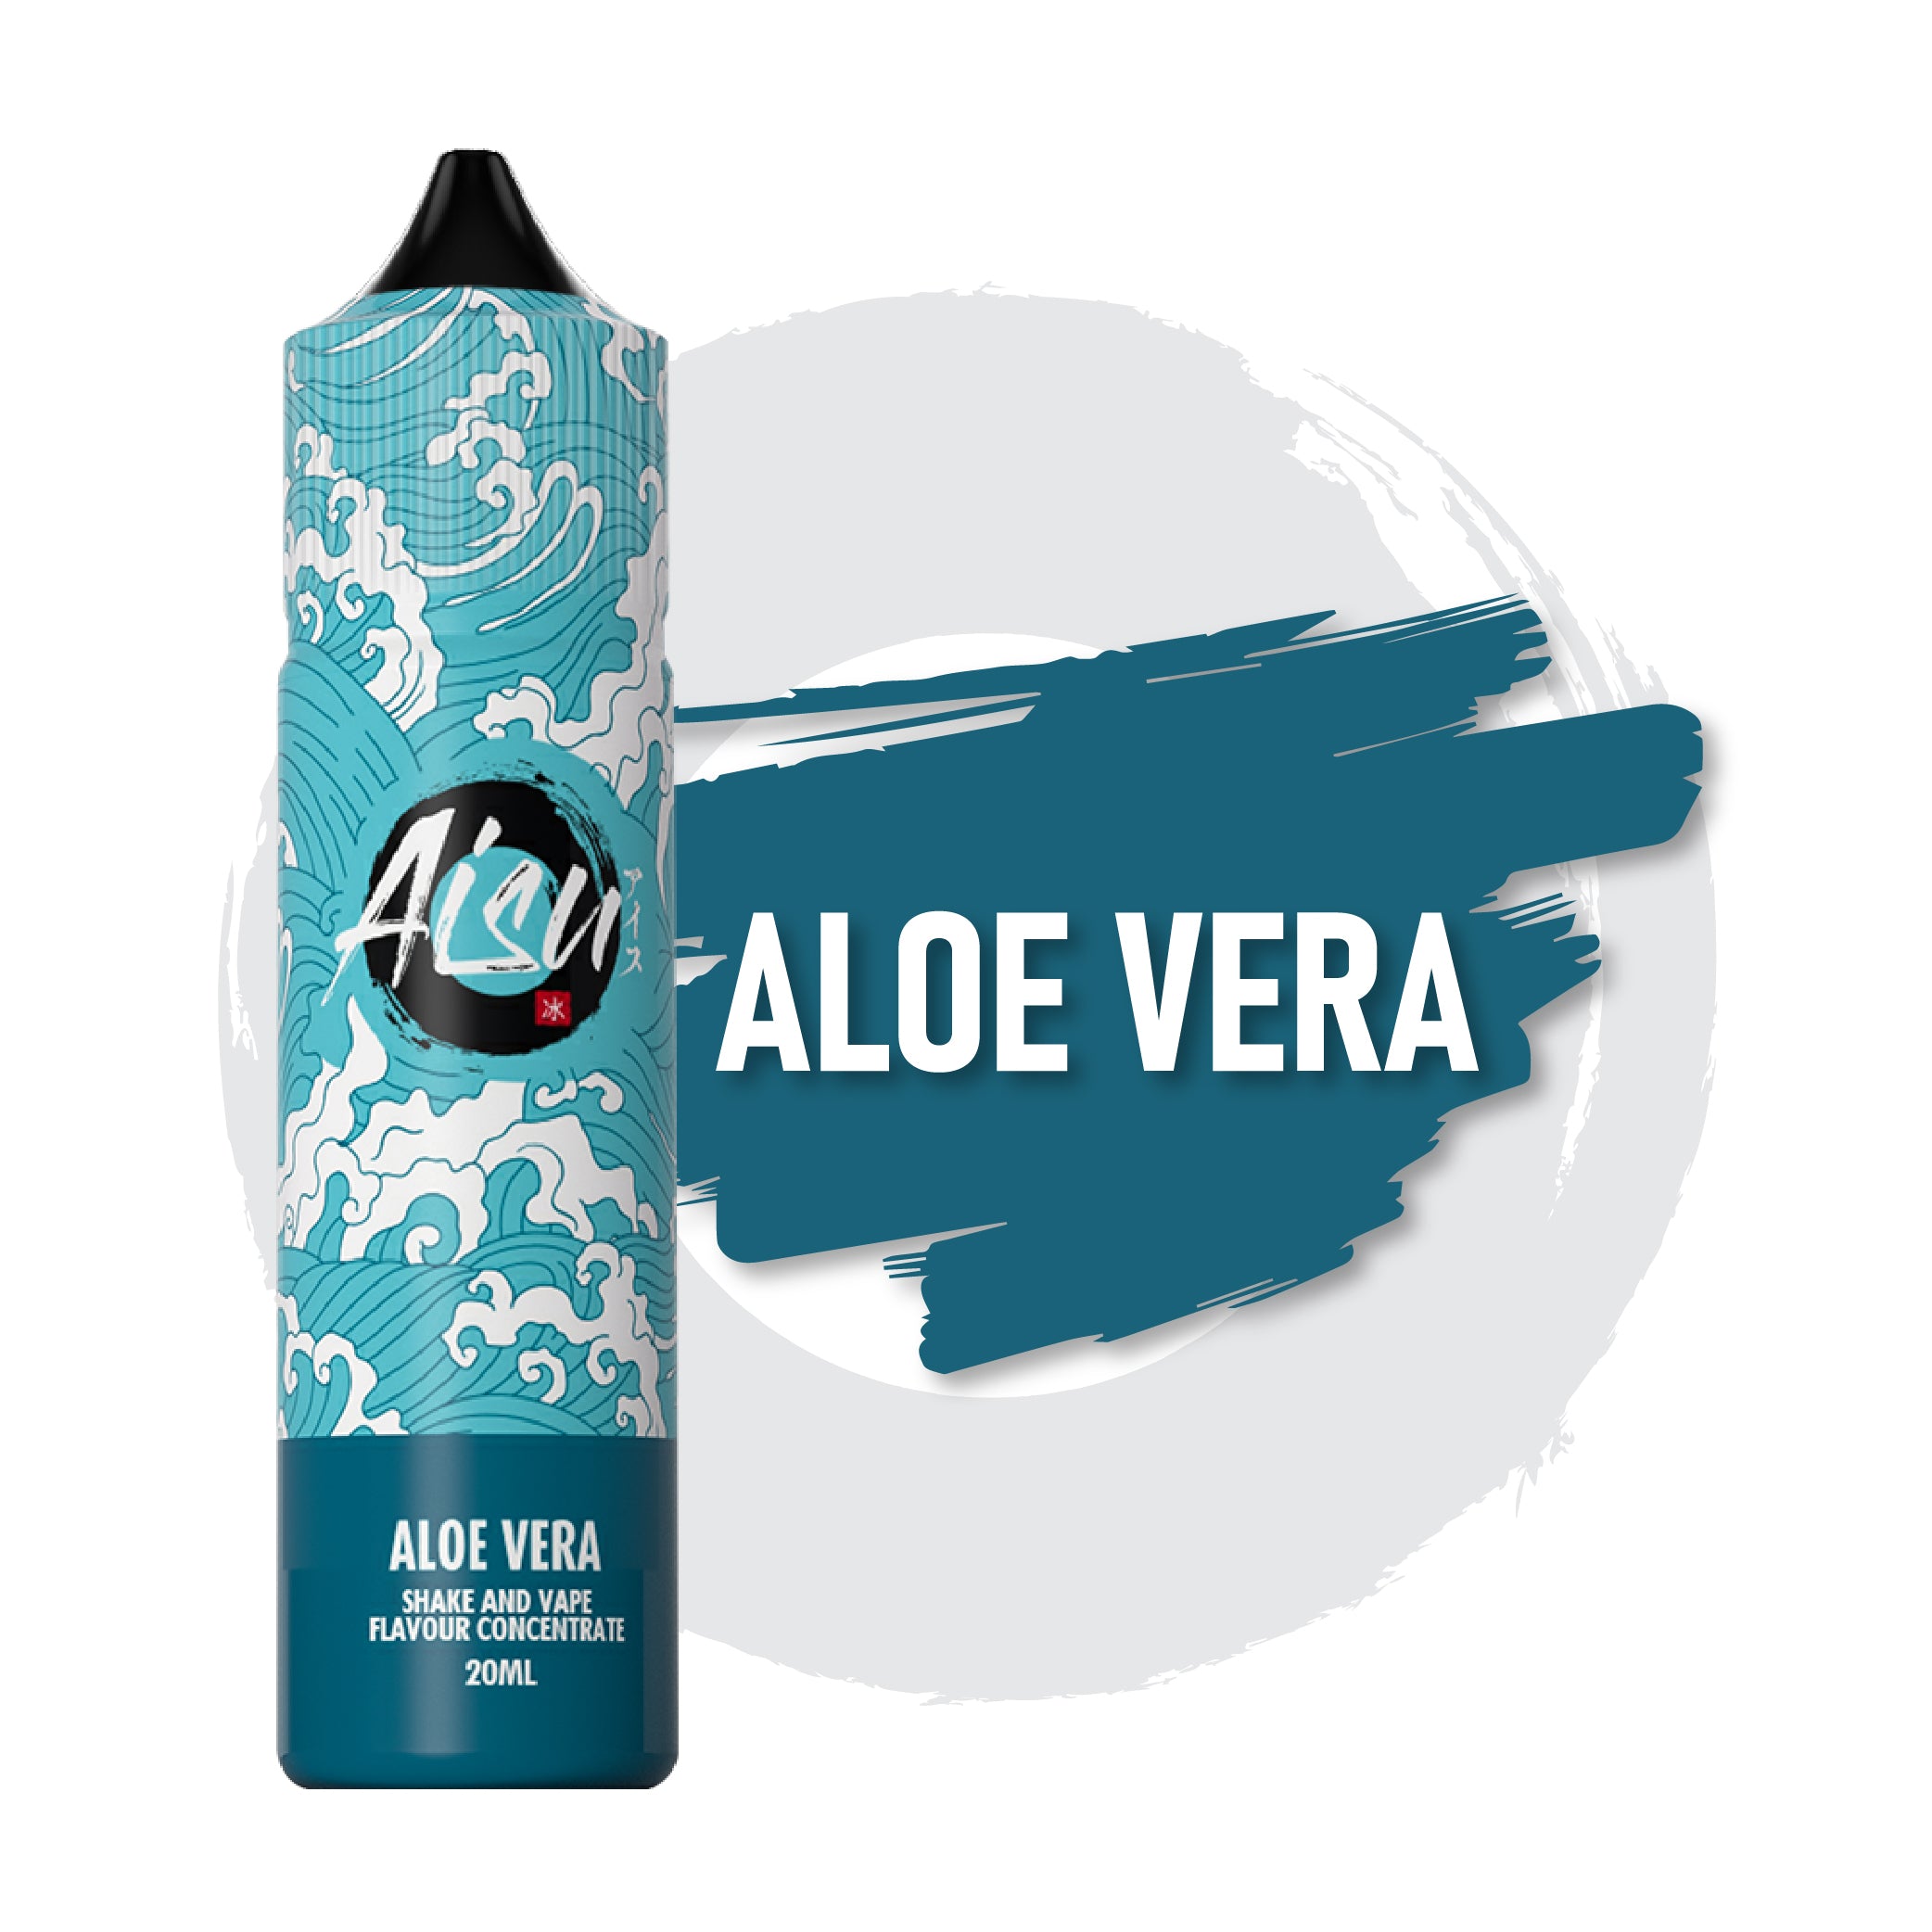 Botella de e-líquido concentrado de sabor AISU Aloe Vera Shake and Vape de 20 ml